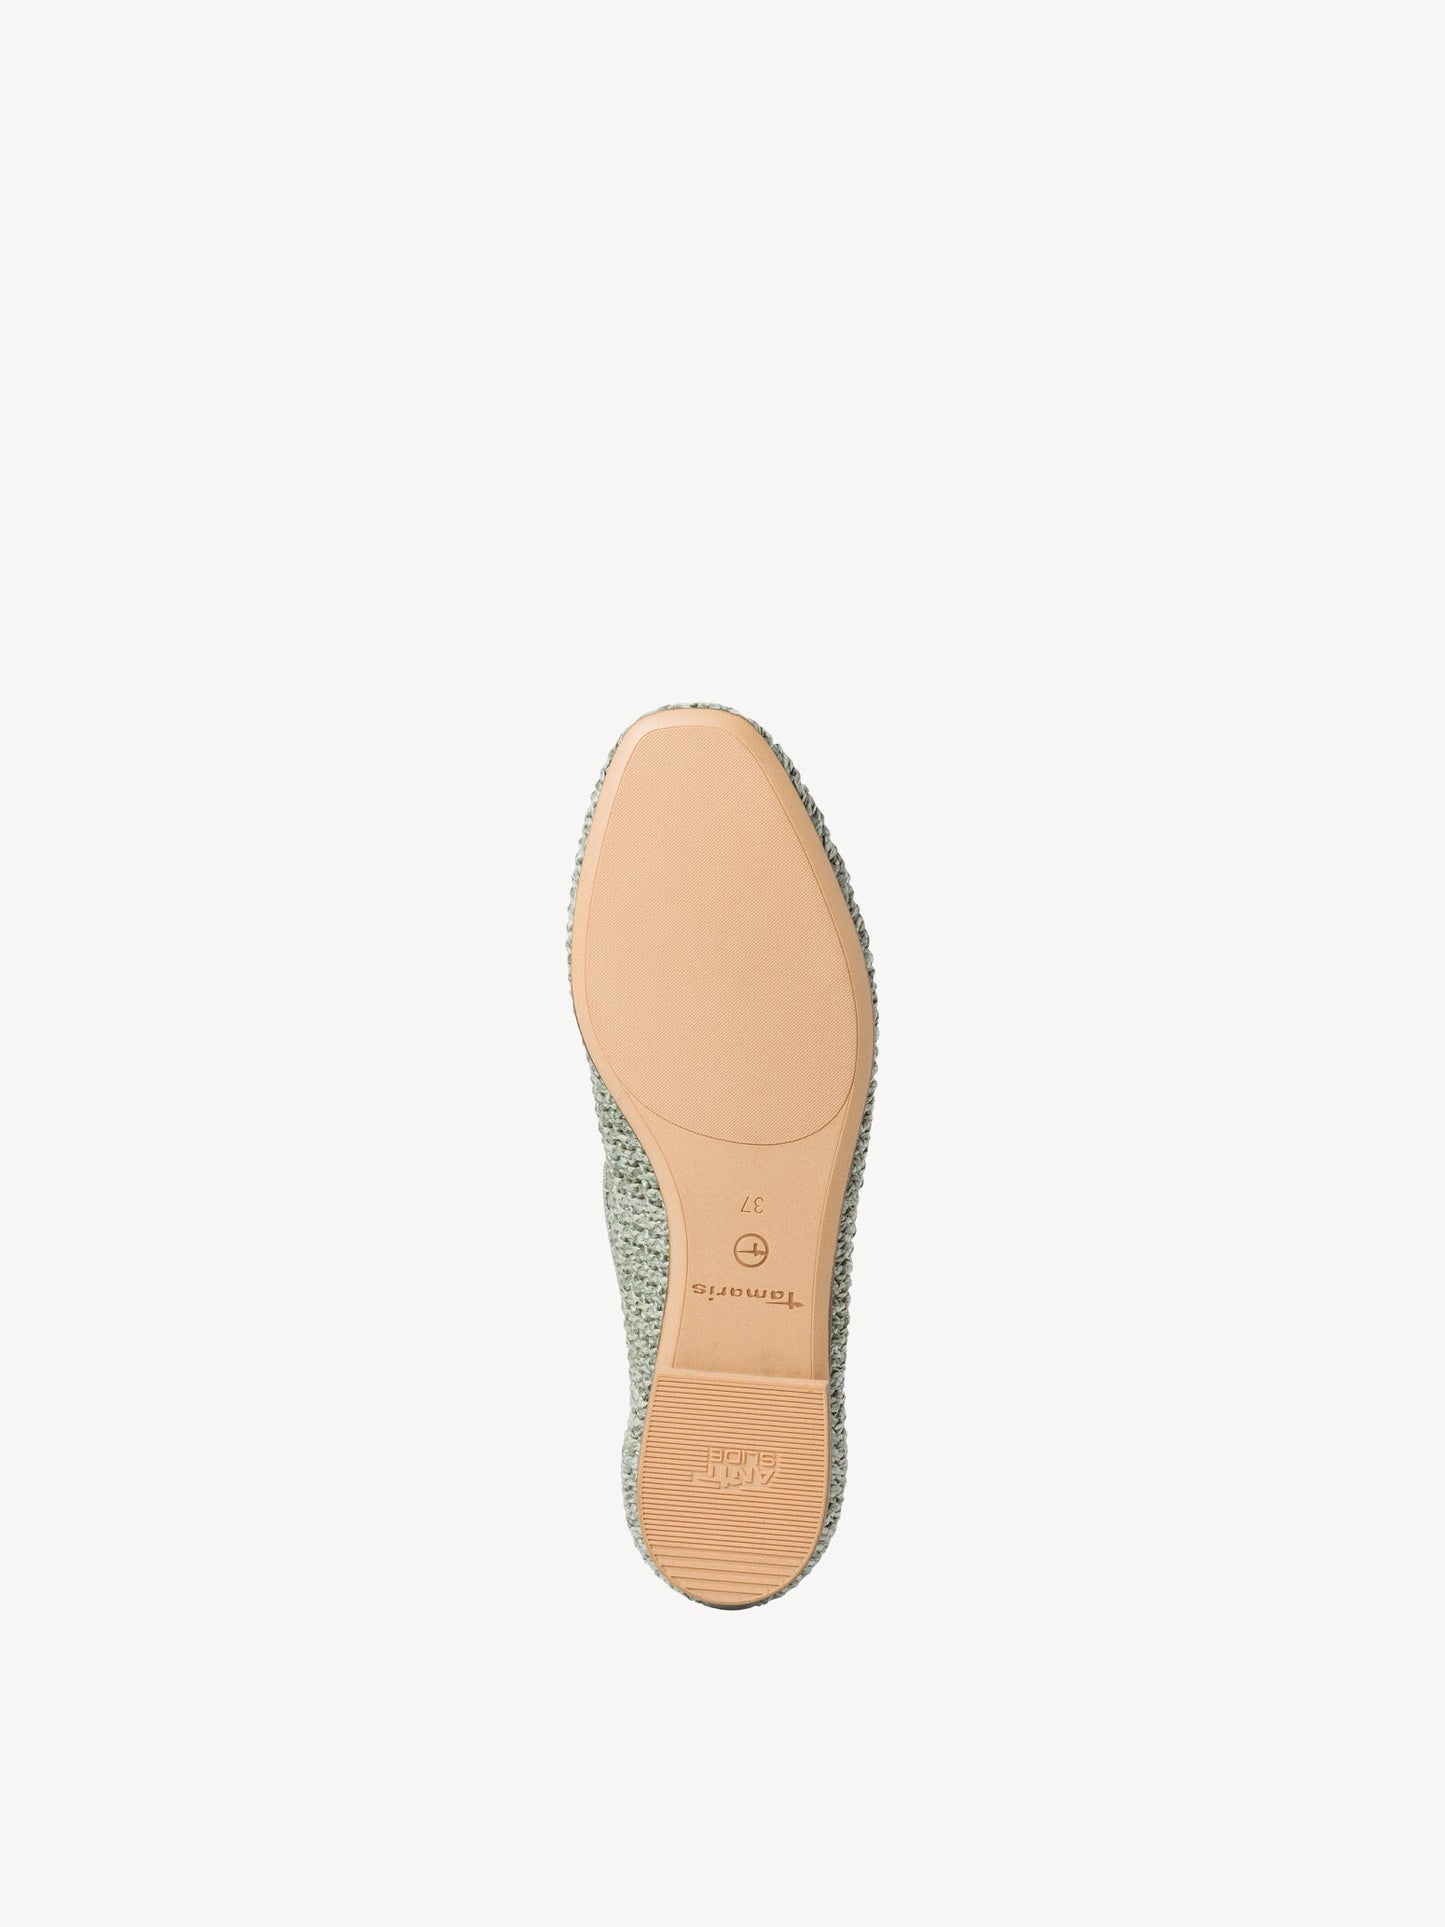 Tamaris Women's 1-24227-36  Slipper Loafer Shoes Pistacchio Green